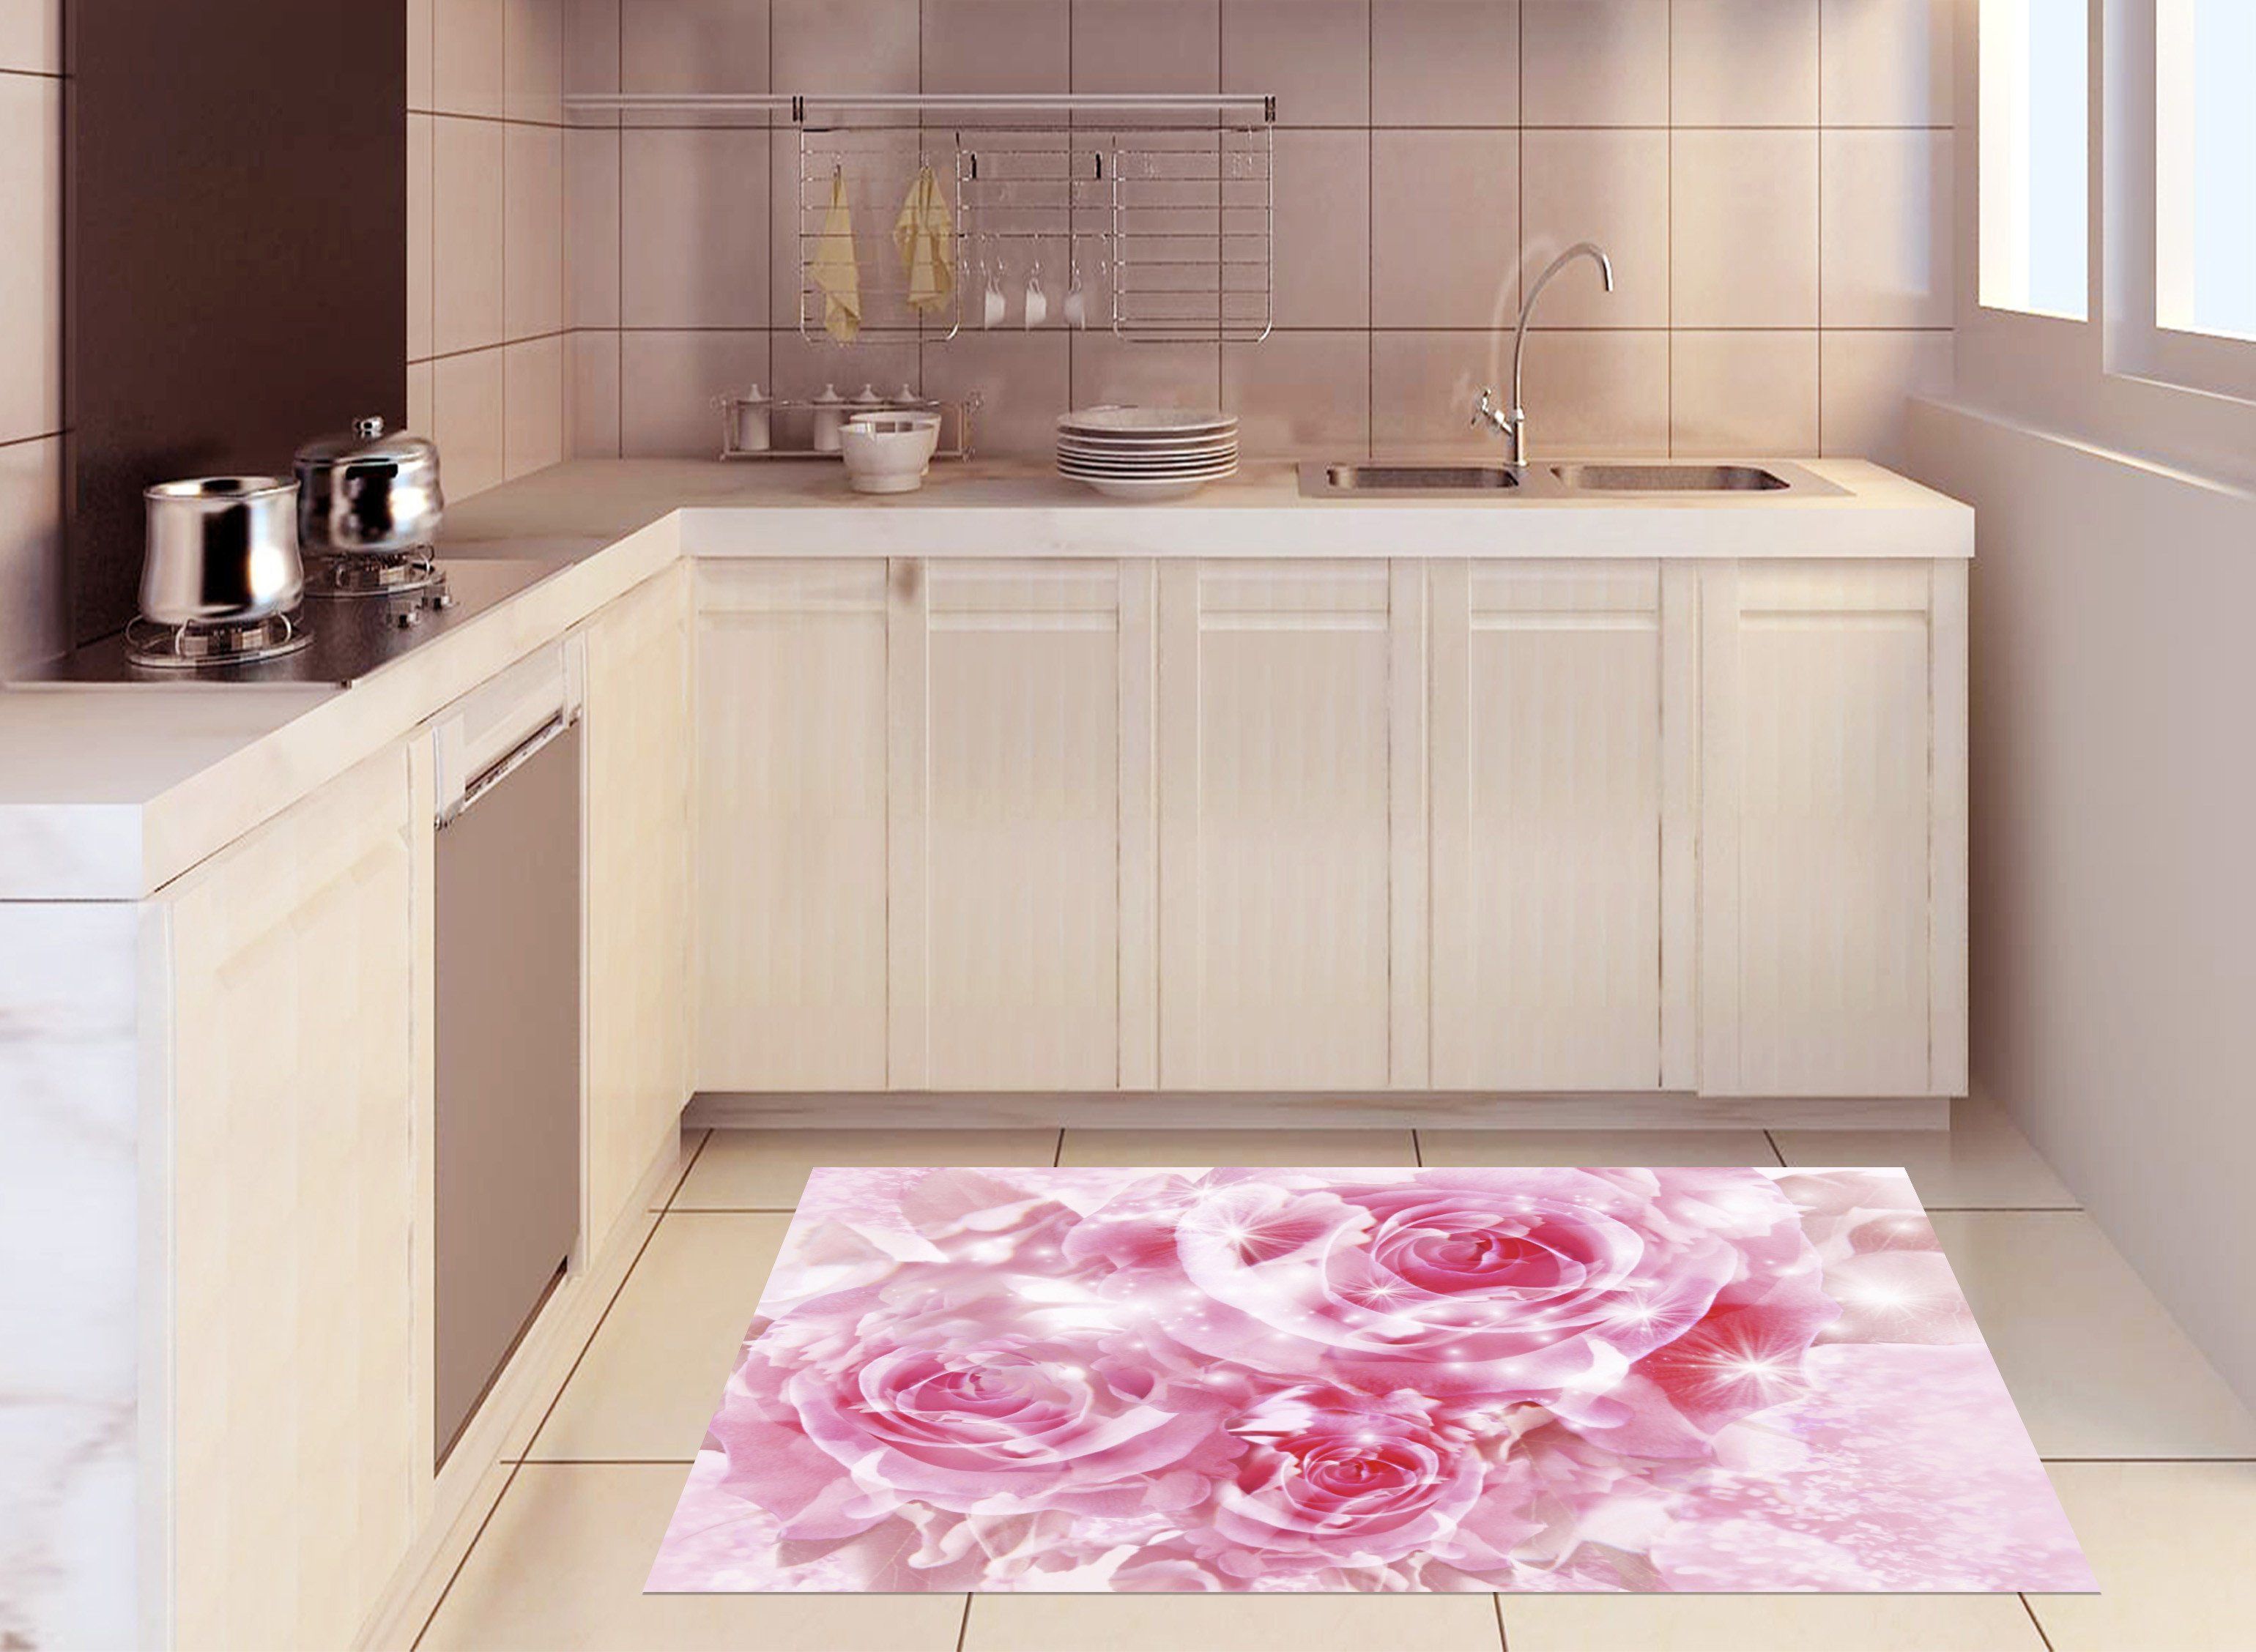 3D Shiny Roses Kitchen Mat Floor Mural Wallpaper AJ Wallpaper 